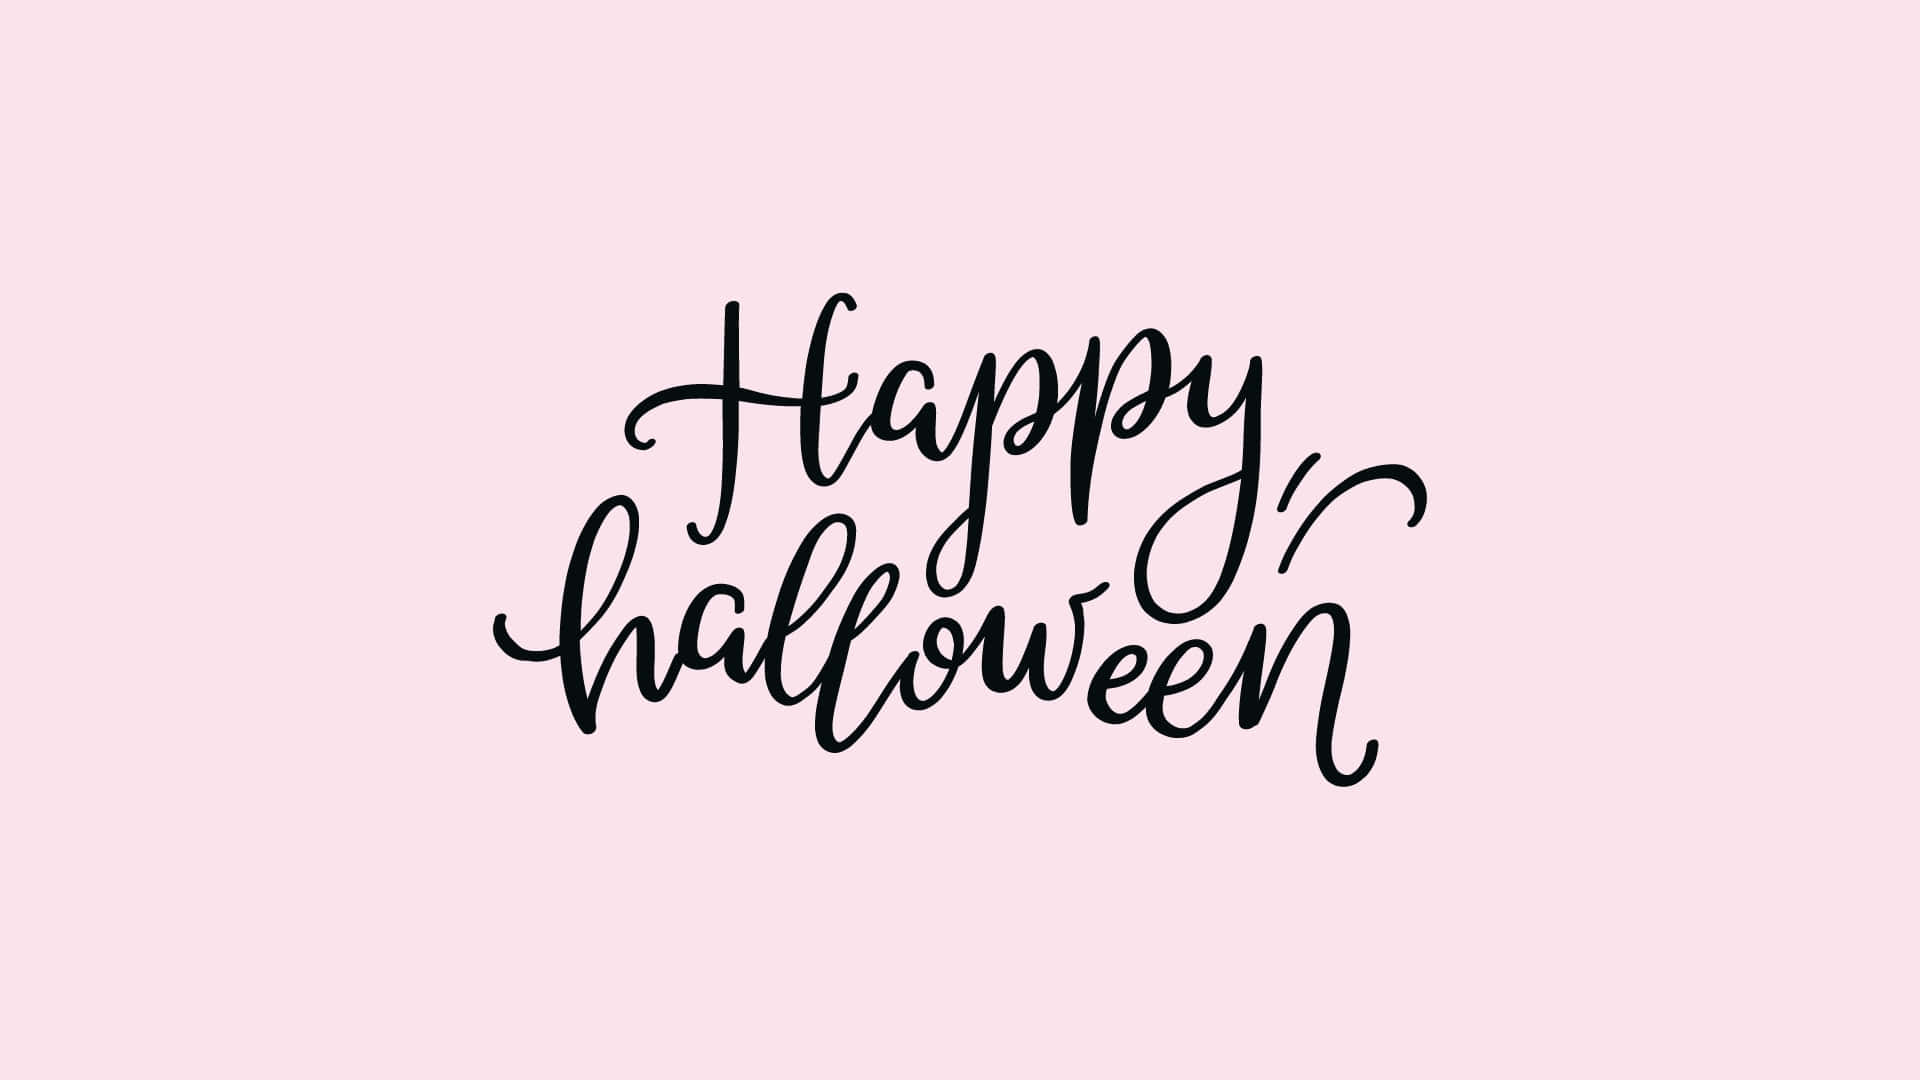 happy halloween handwritten lettering on a pink background